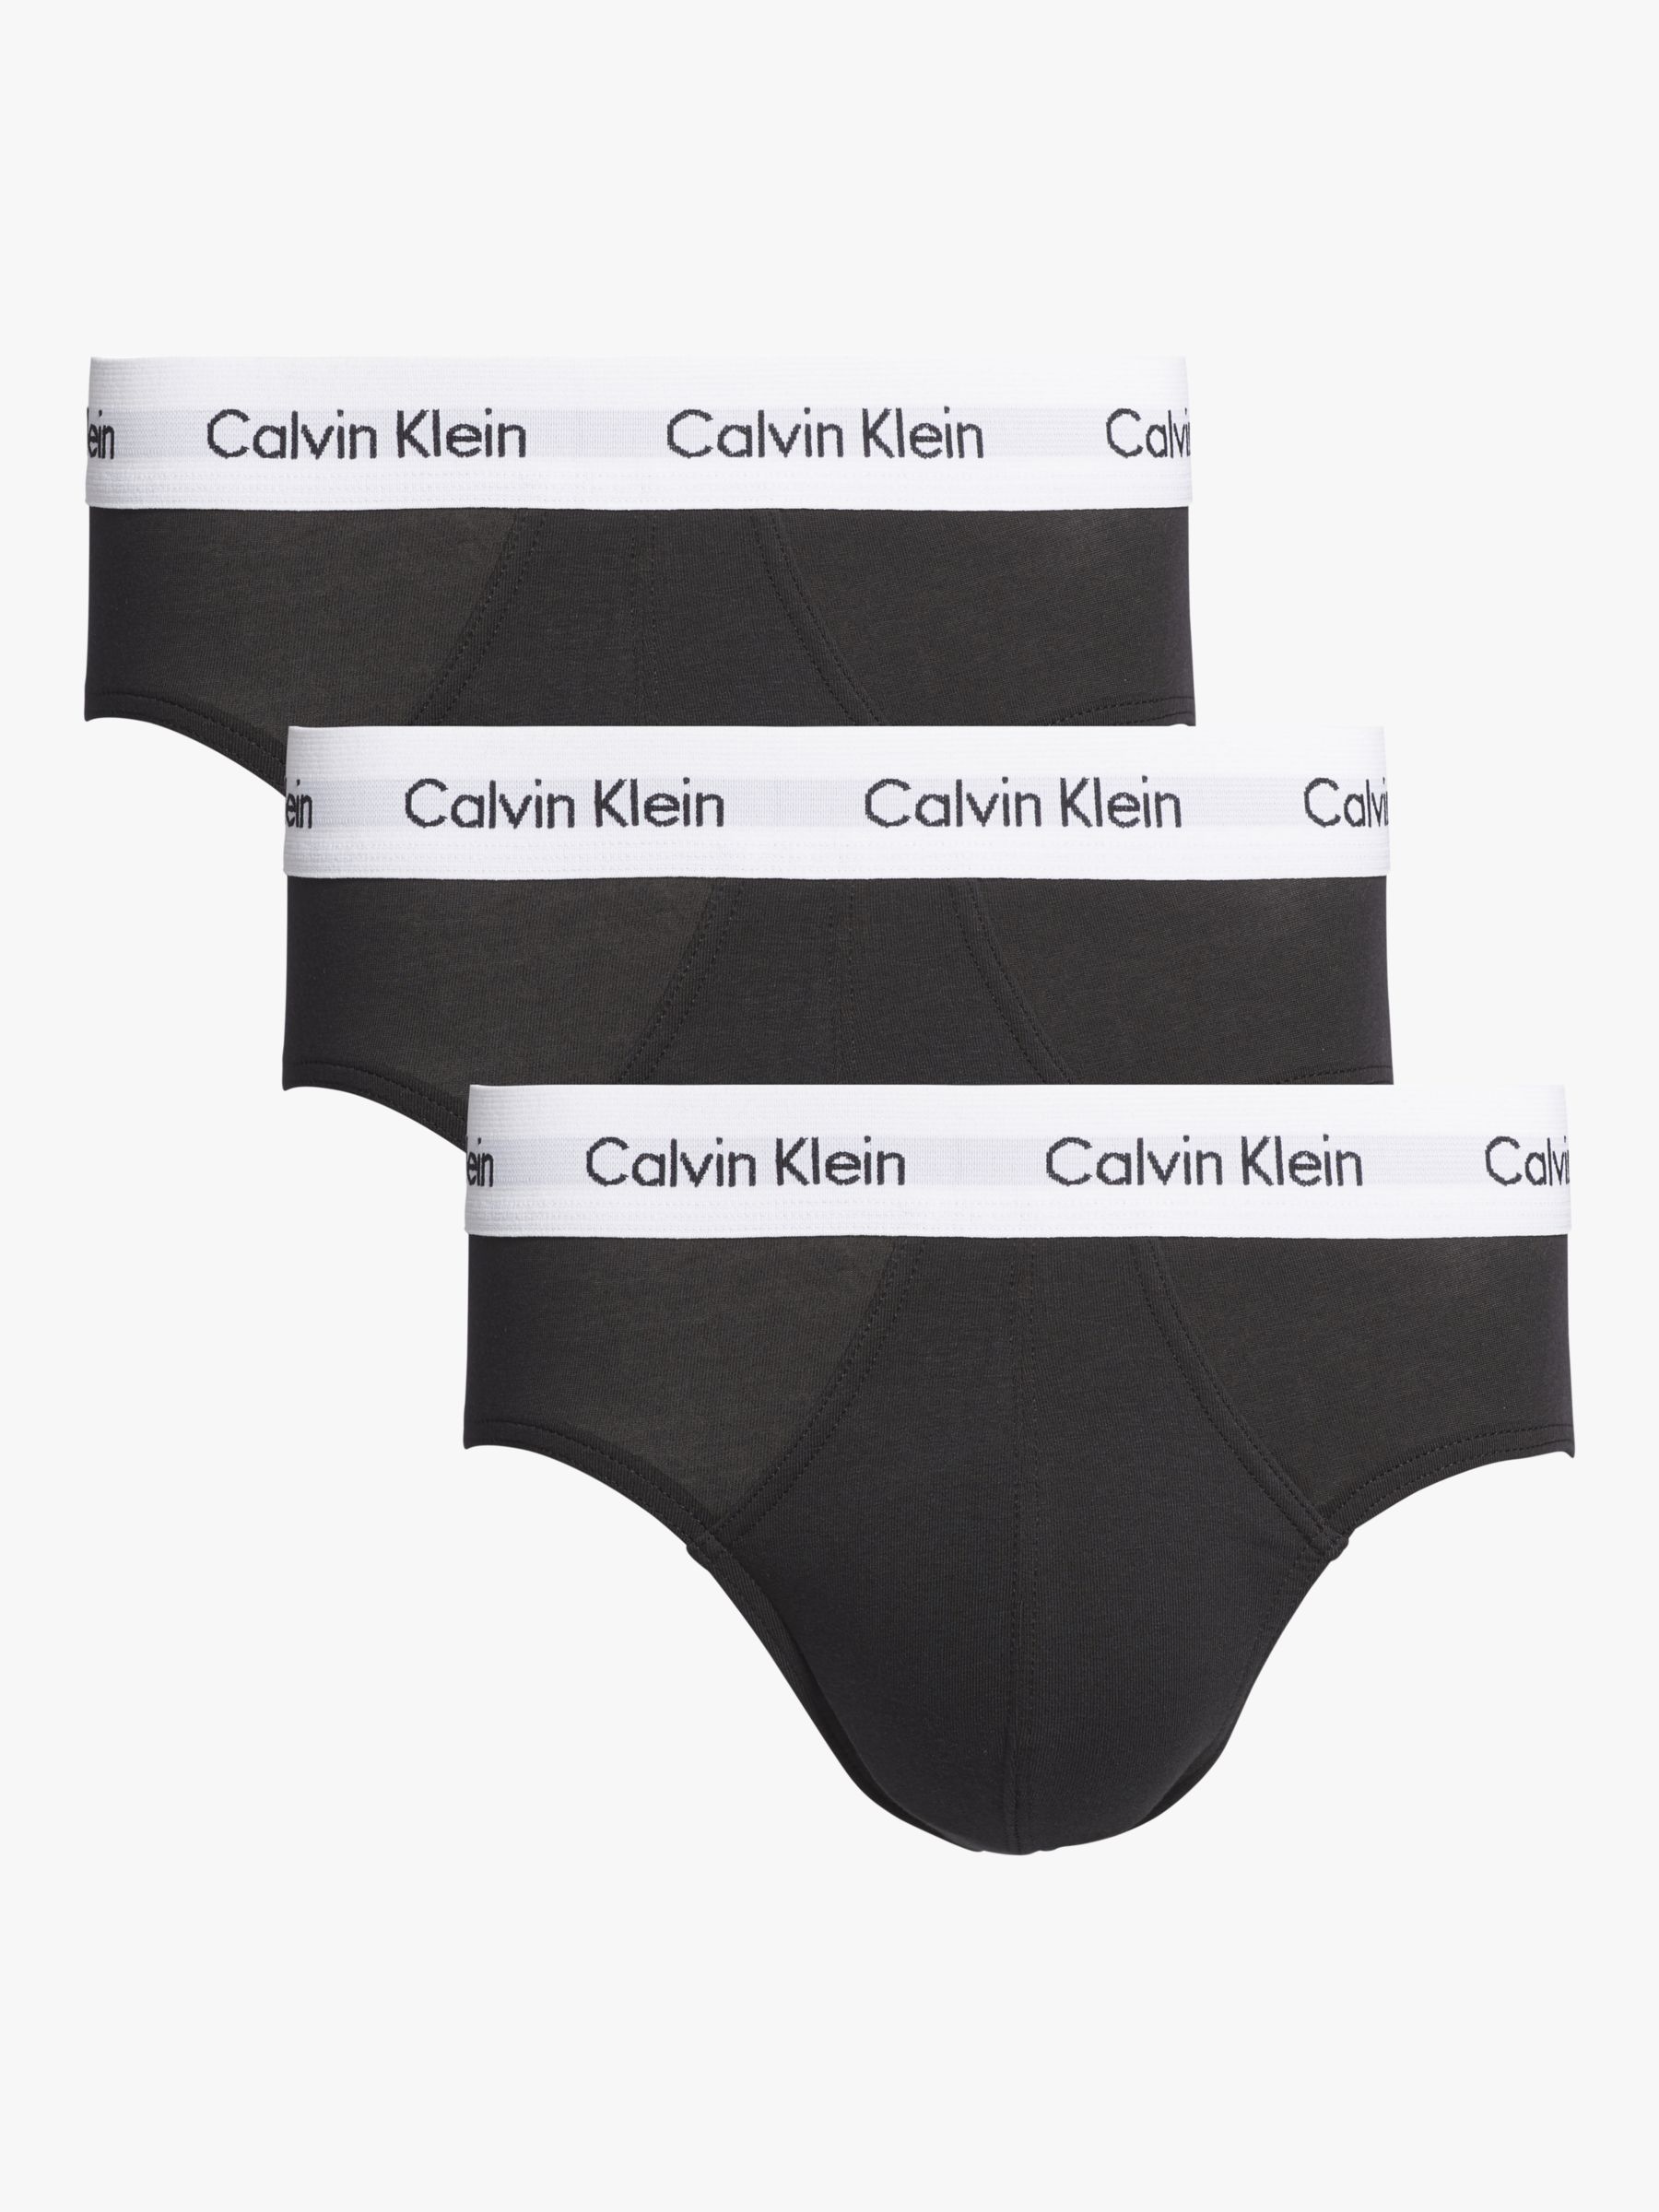 Iconic Underwear From Calvin Klein At John Lewis